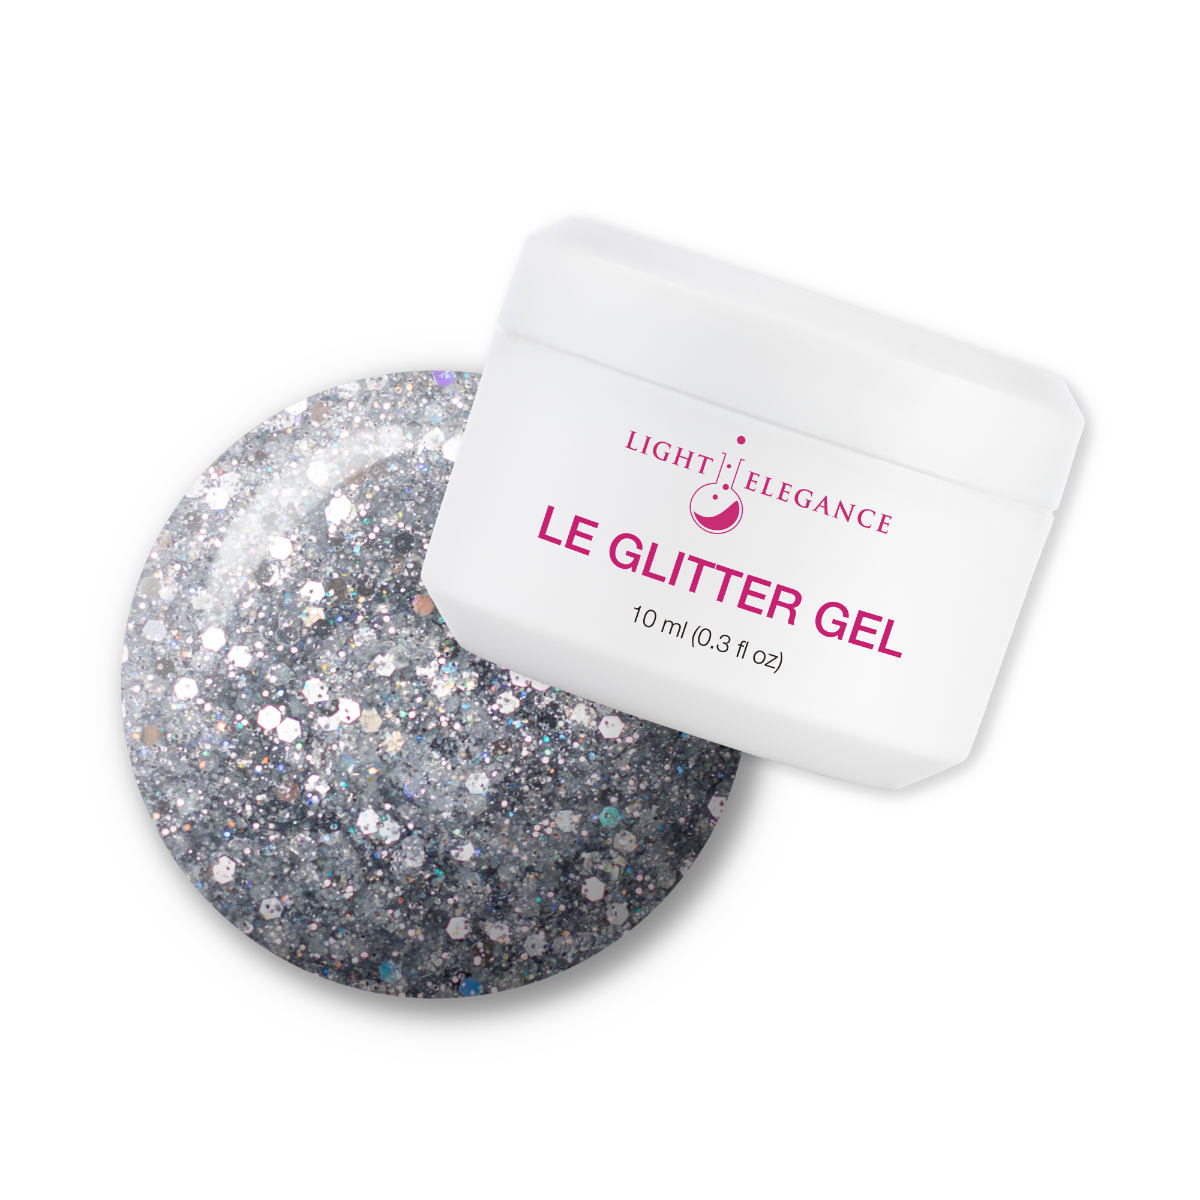 Light Elegance Glitter Gel - Big Diamond :: New Packaging - Creata Beauty - Professional Beauty Products